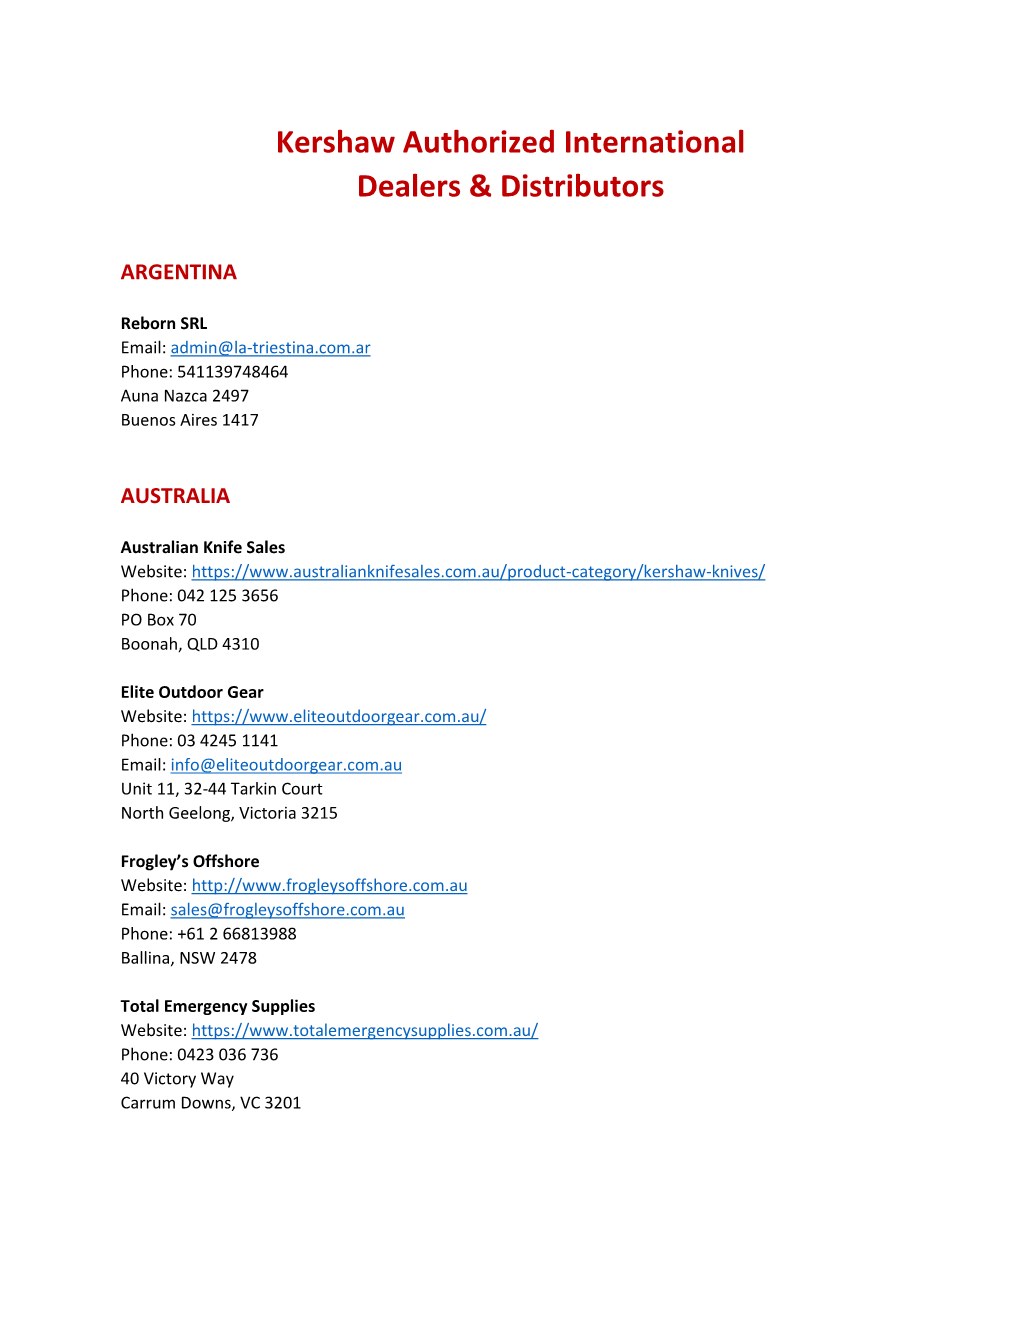 Kershaw Authorized International Dealers & Distributors